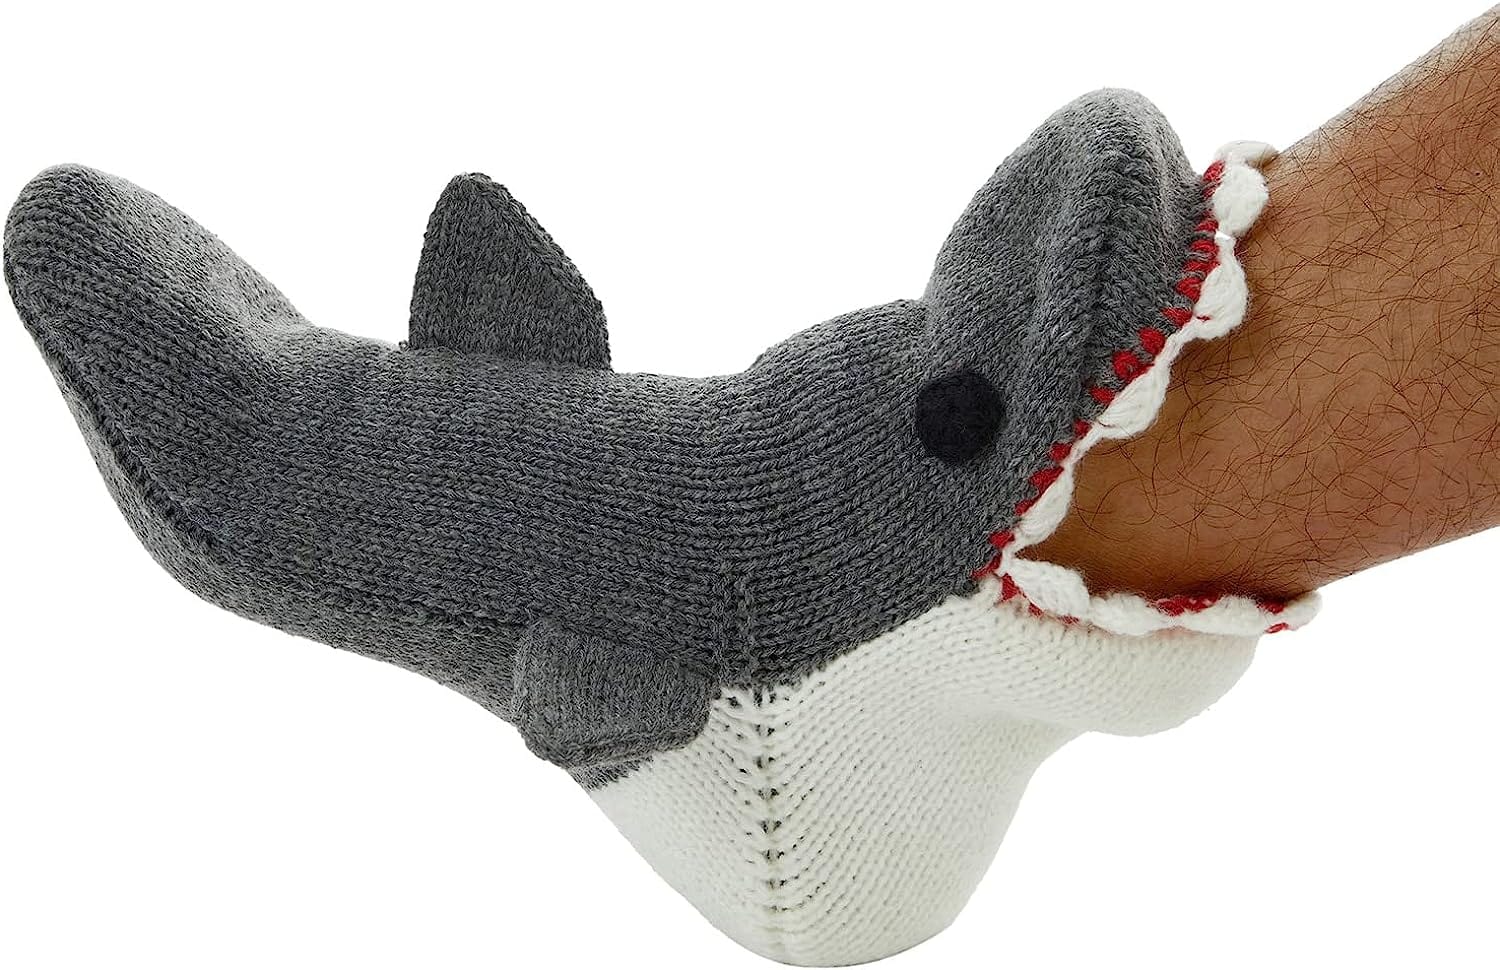 THATLILSHOP One Size / Shark Women Men Novelty Animal Pattern Socks Crazy Funny Knit Crocodile Socks Funny Gifts